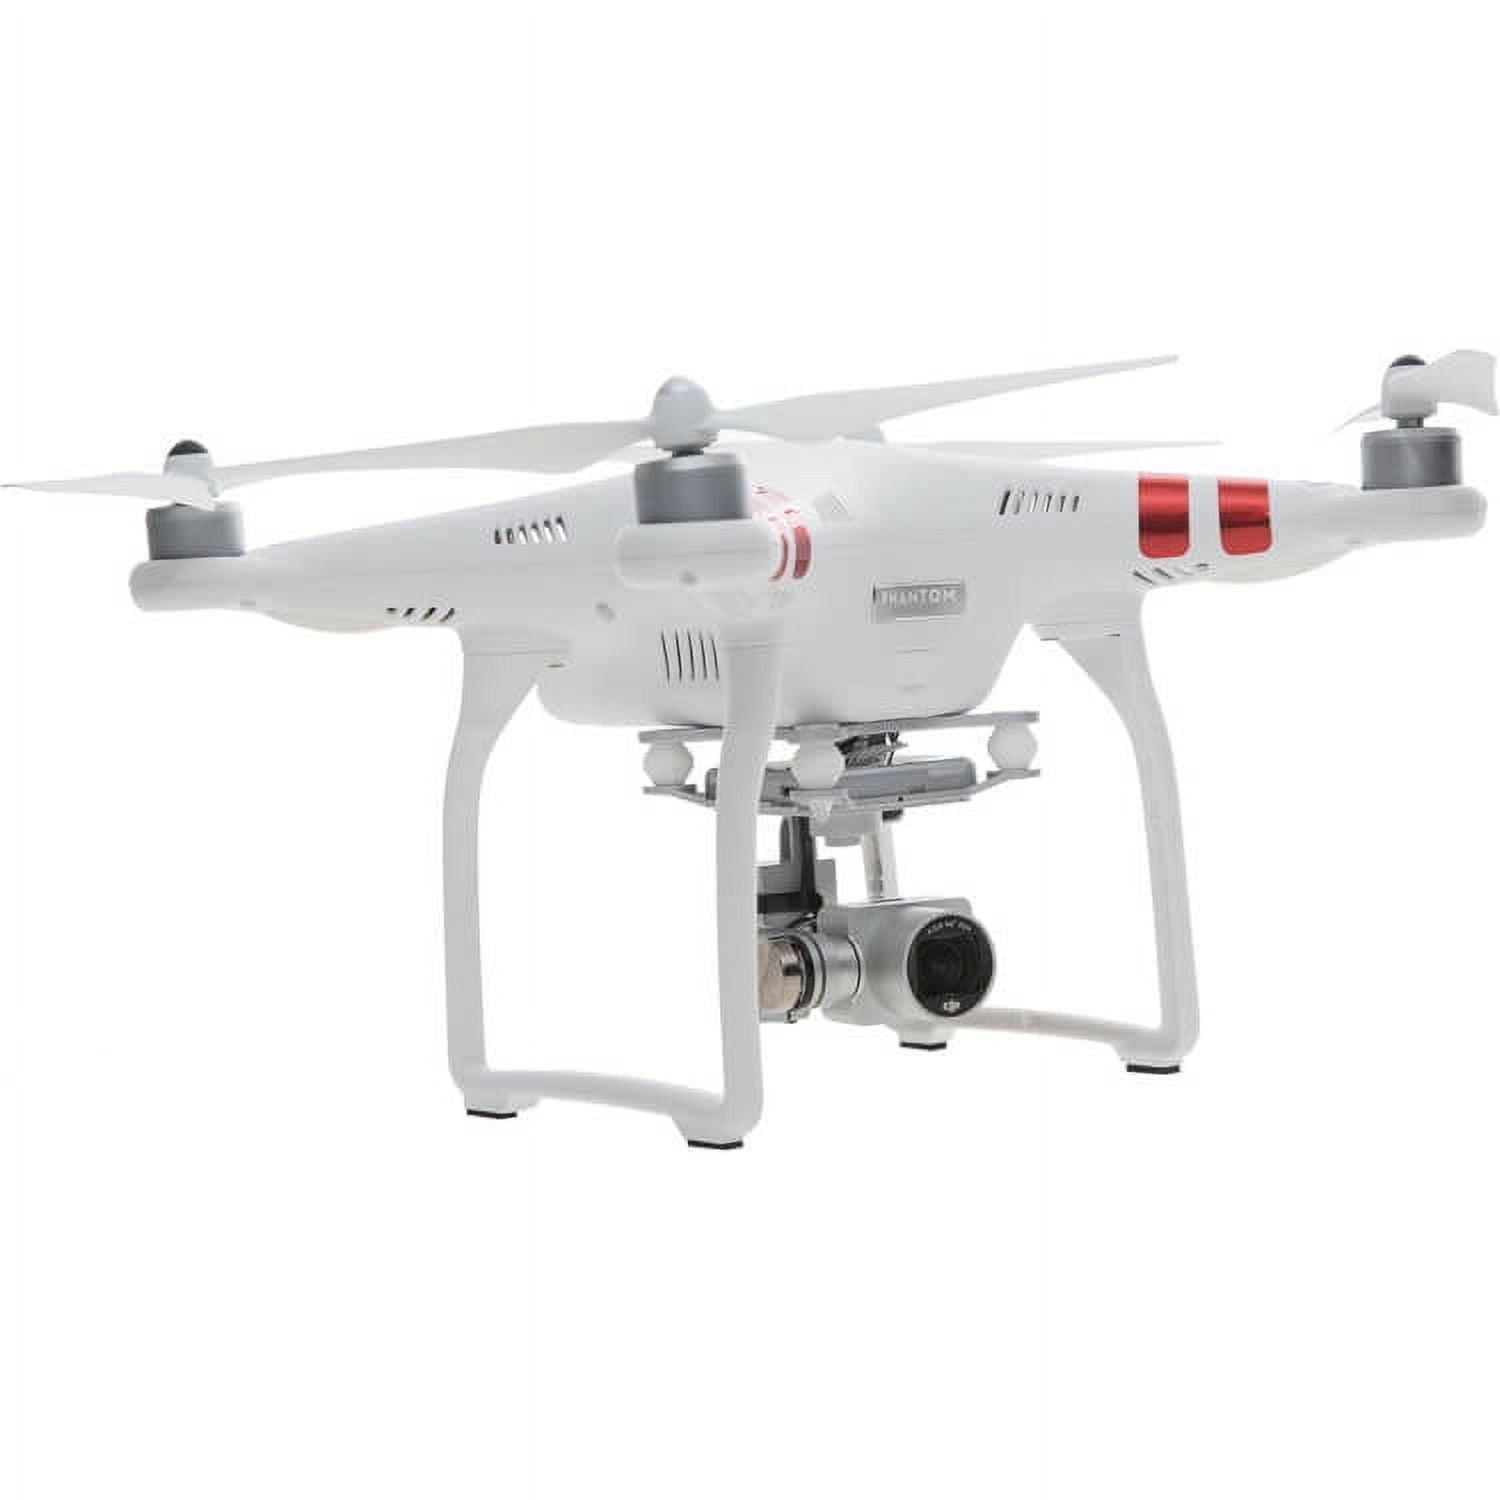 DJI Phantom 3 Standard review: An entry-level drone that's much better than  basic - CNET